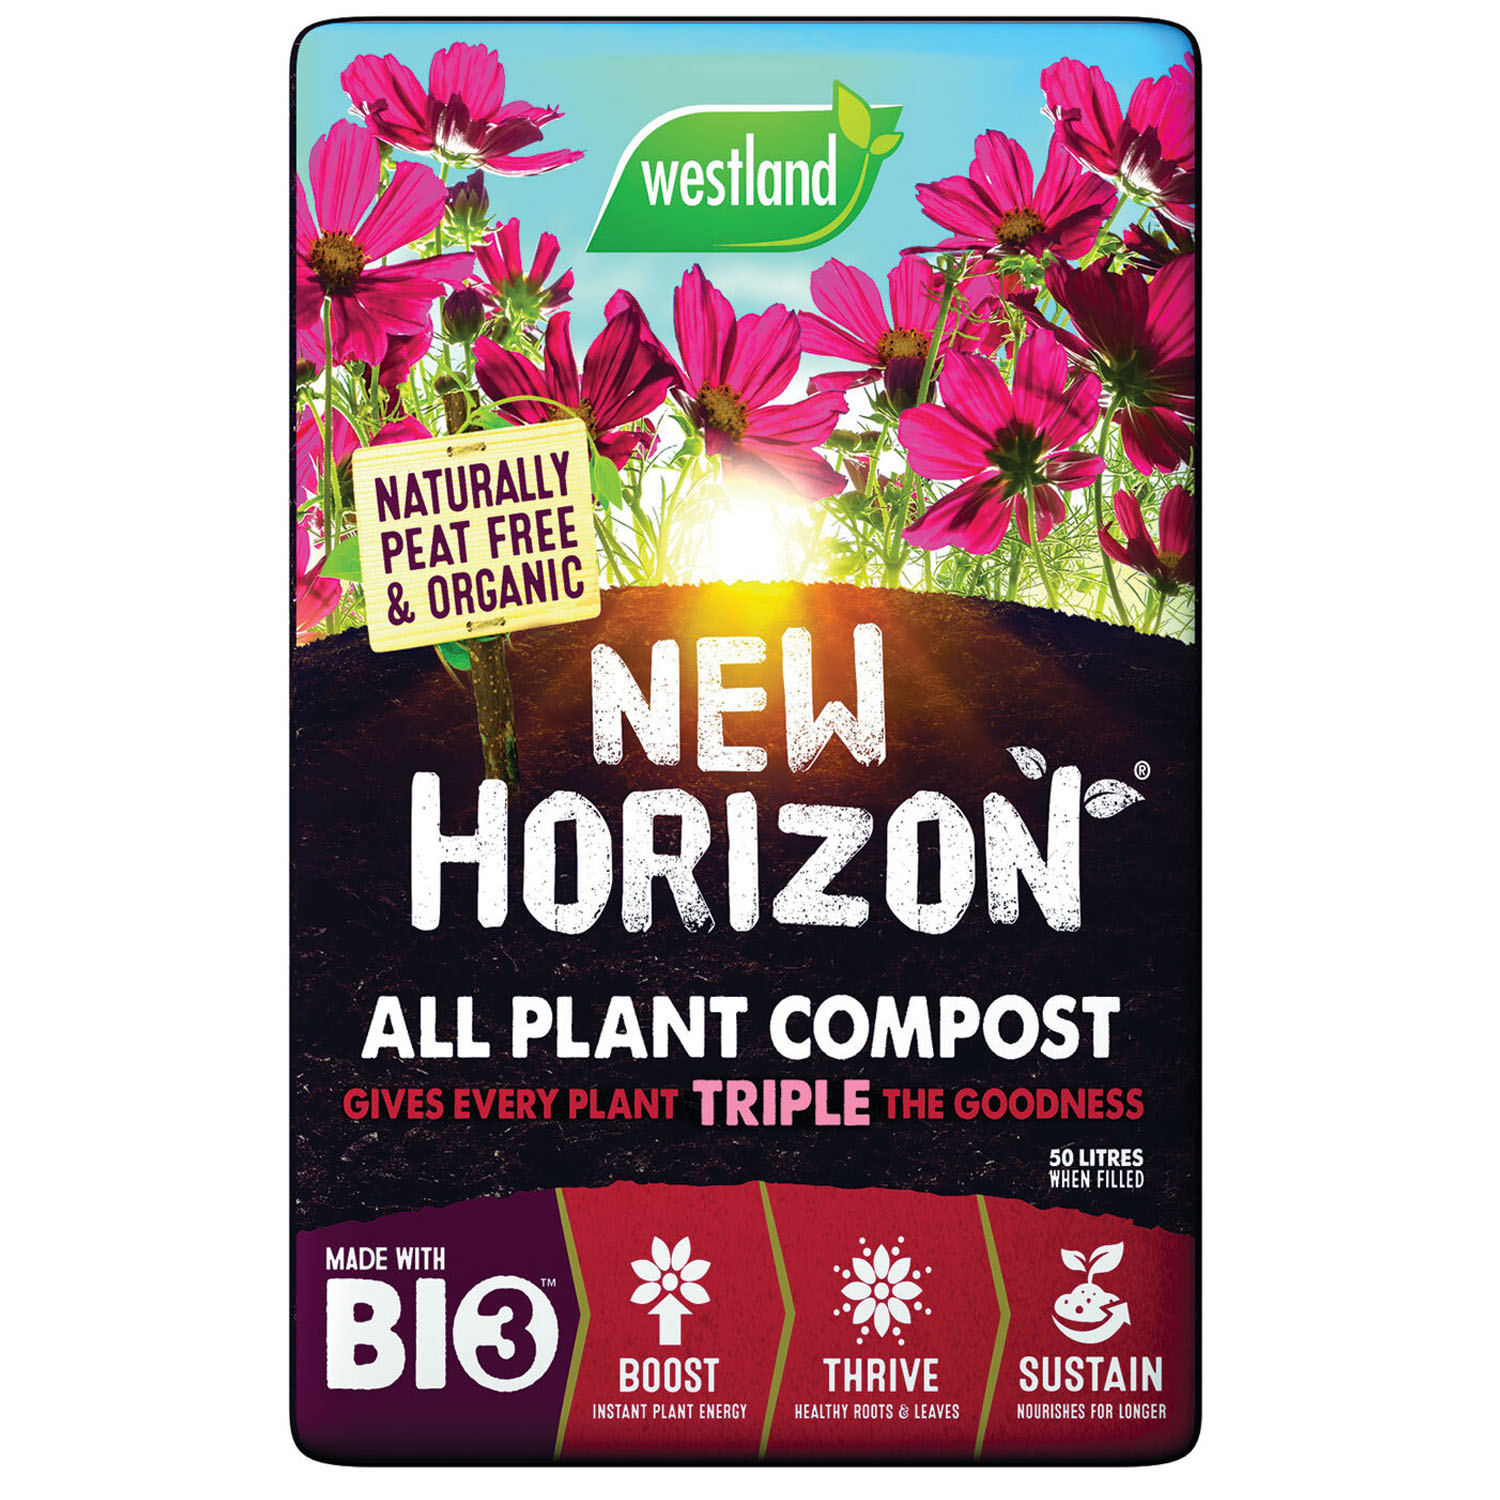 Westland New Horizon All Plant Compost 50L Image